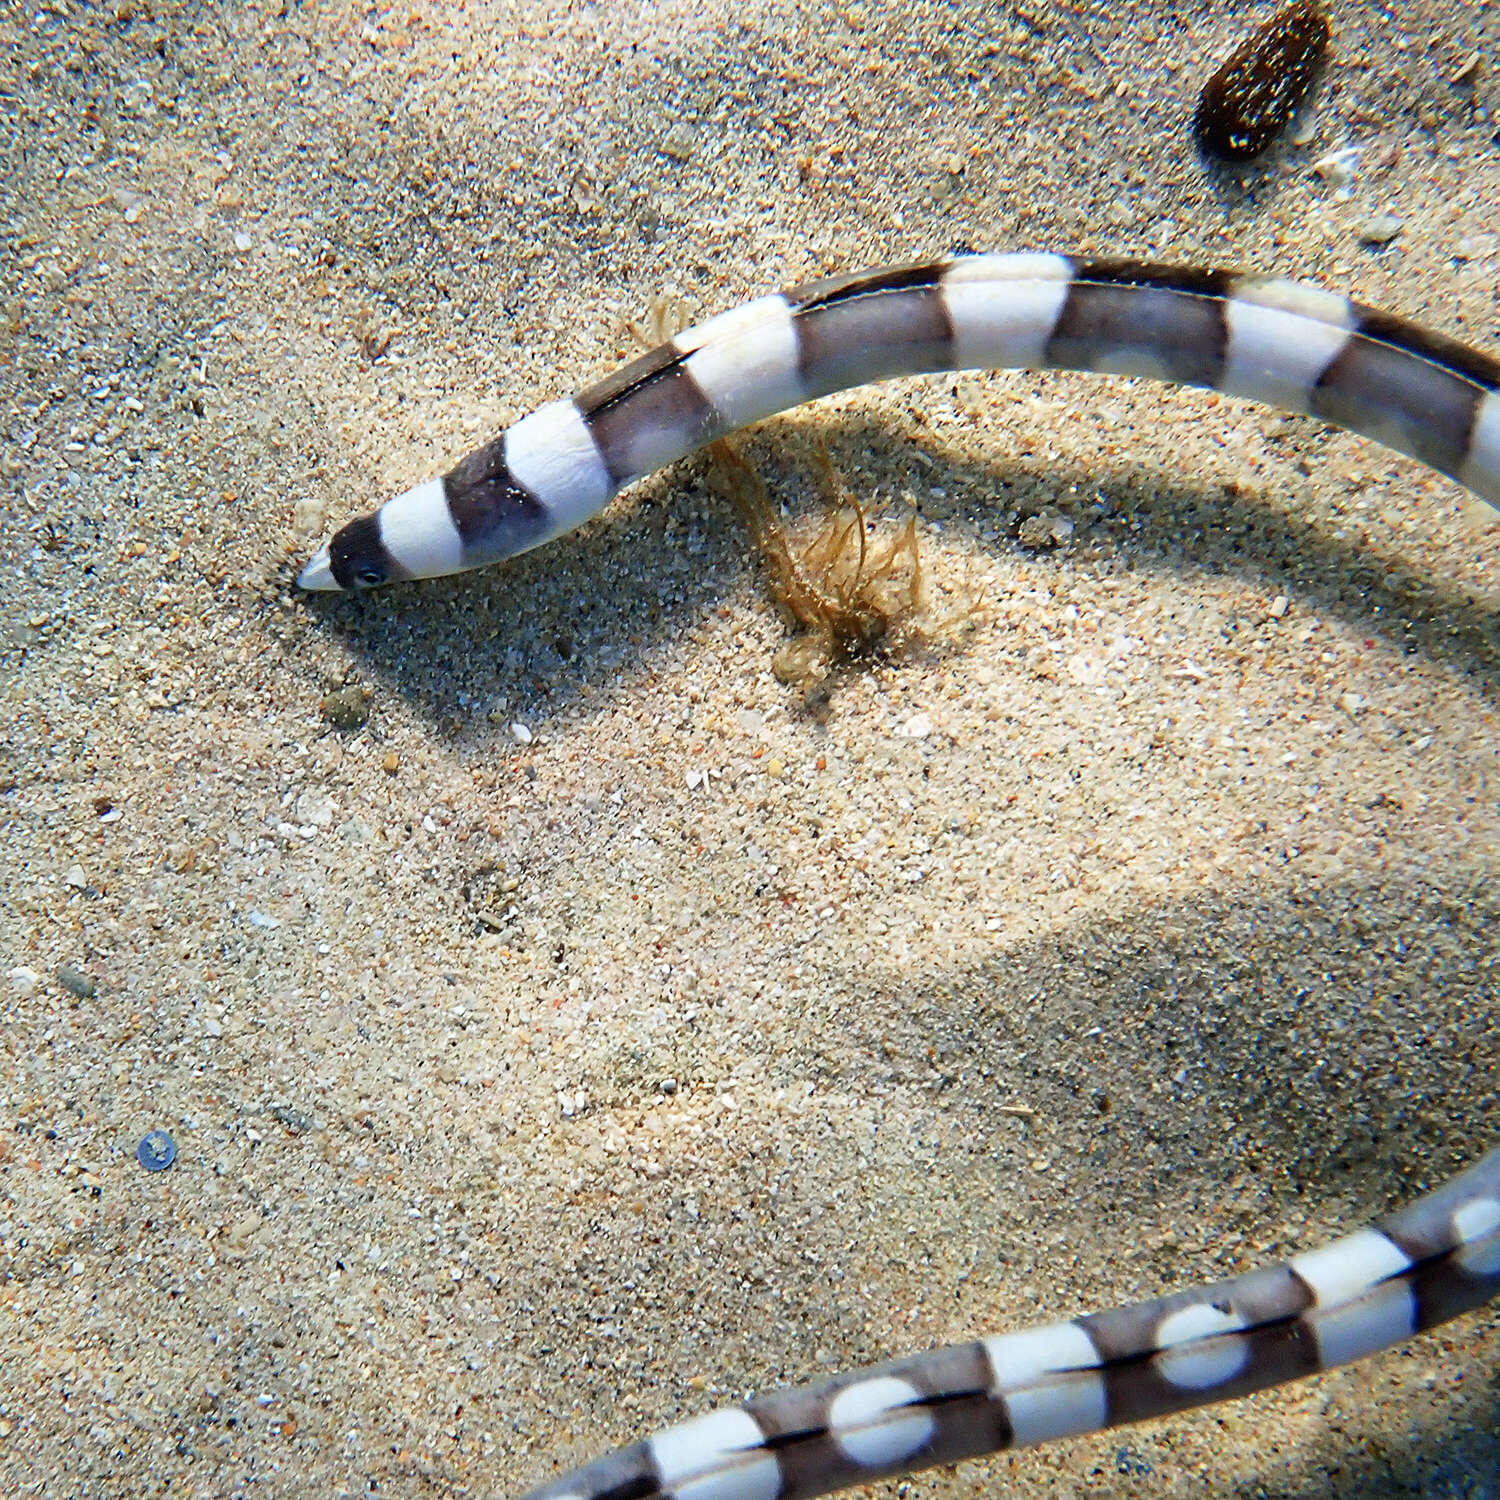 Image of Convict snake eel